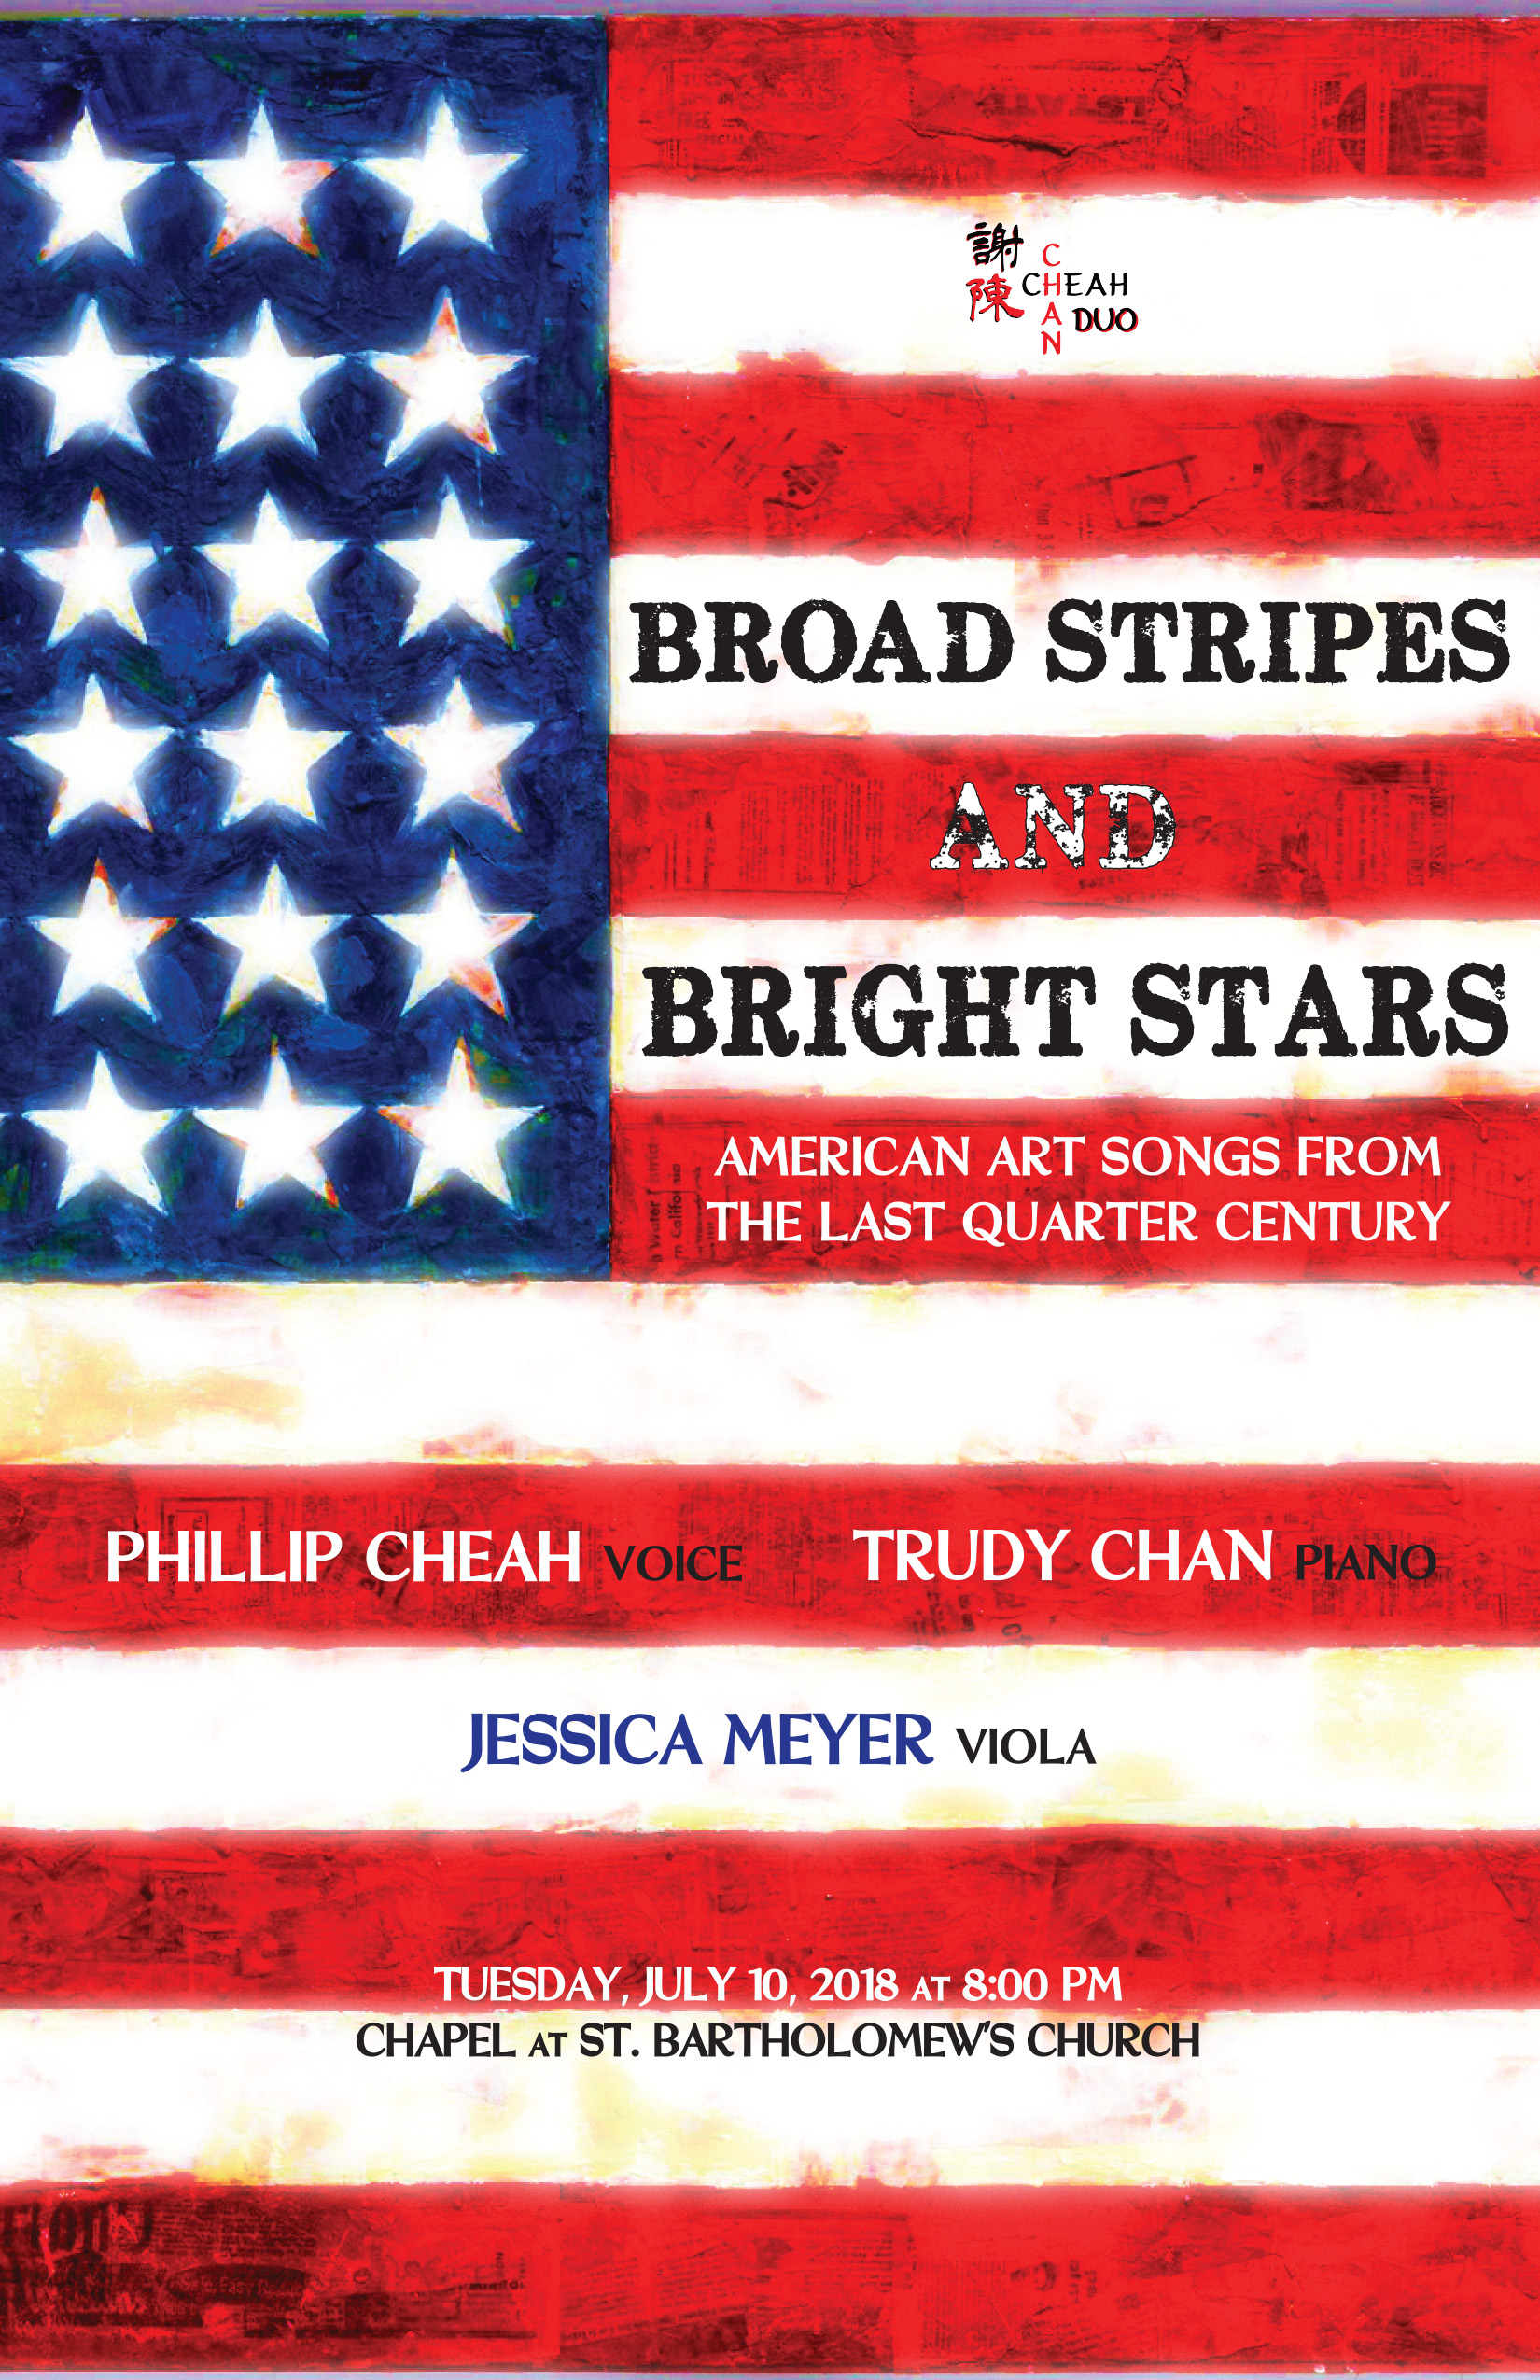 Broad Stripes and Bright Stars Website Program Cover.jpg